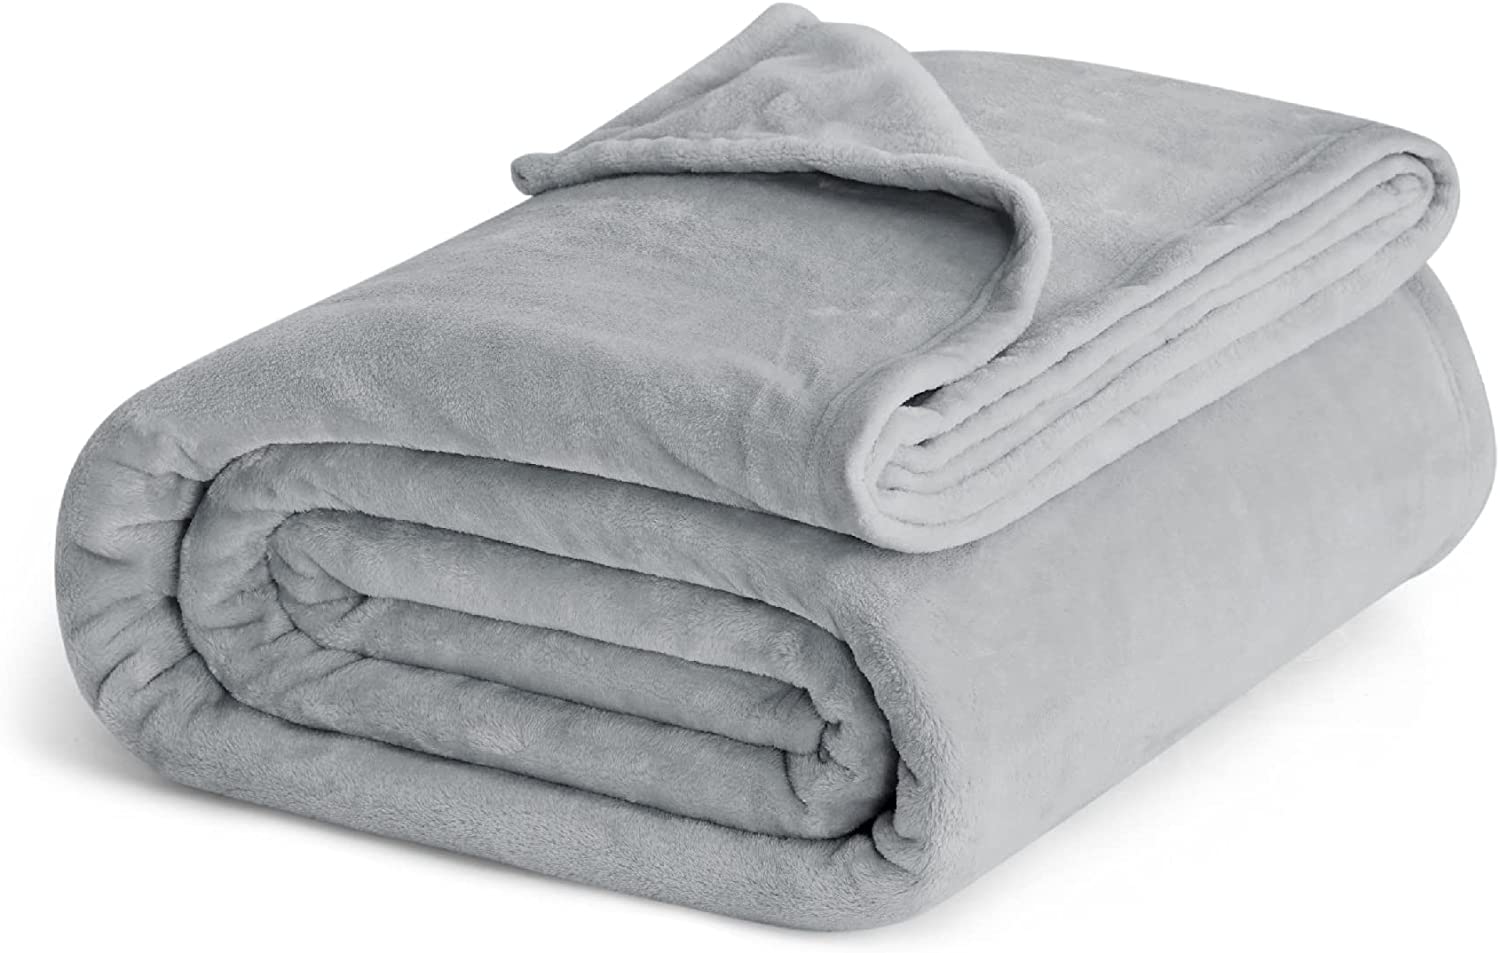 Bedsure Fleece Throw Blanket for Couch Grey - Lightweight Plush 